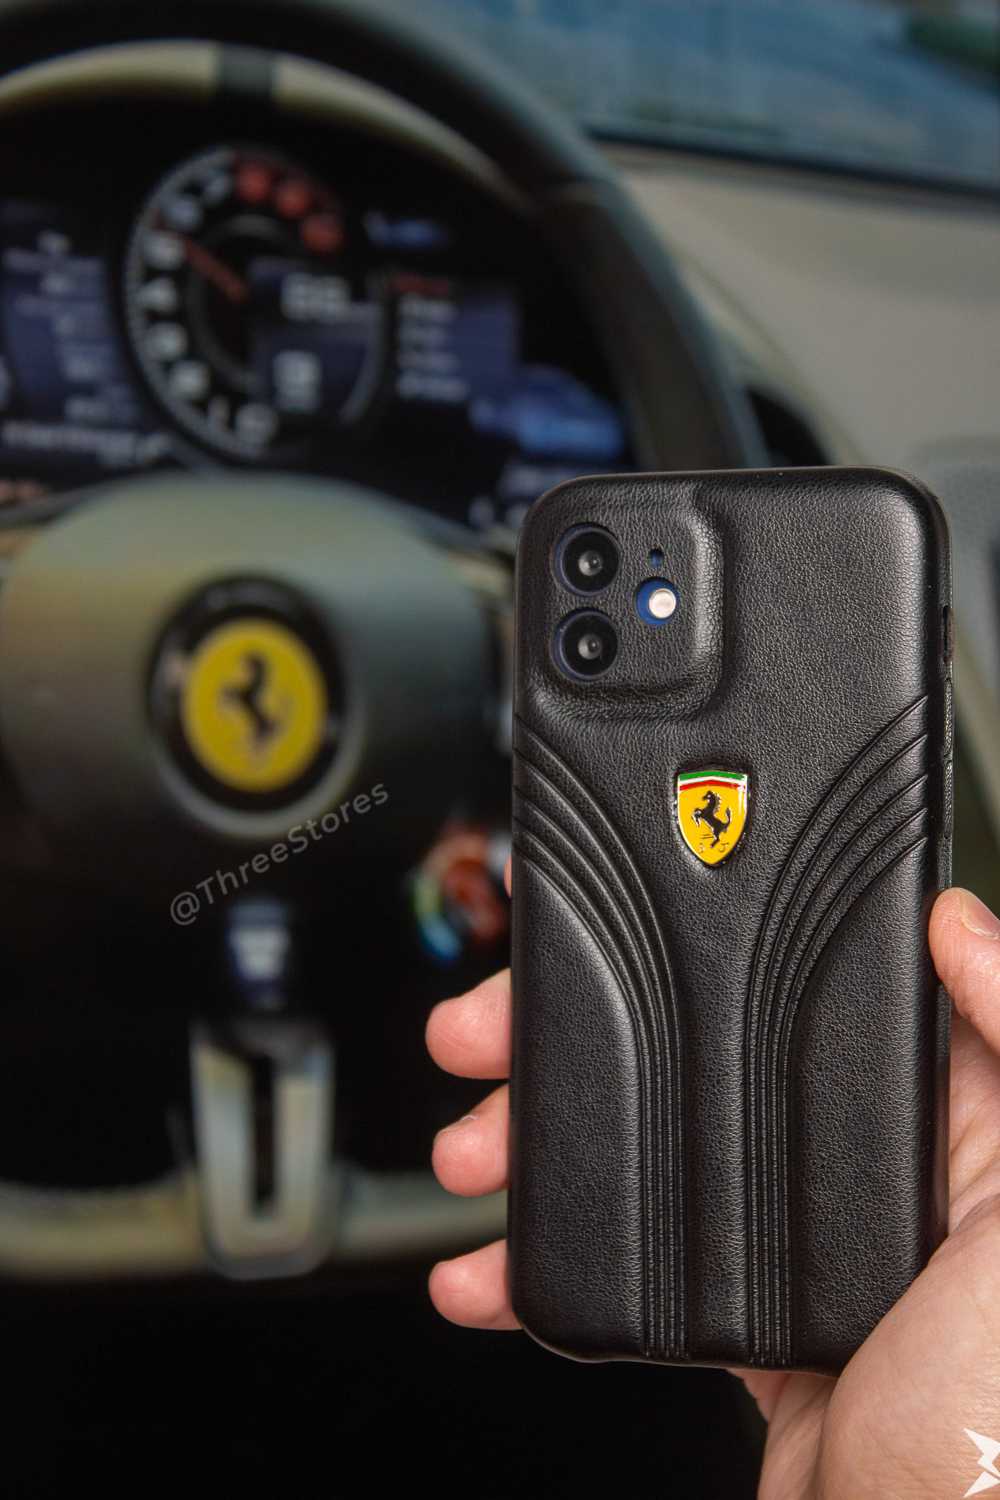 Ferrari Leather Case iPhone 12